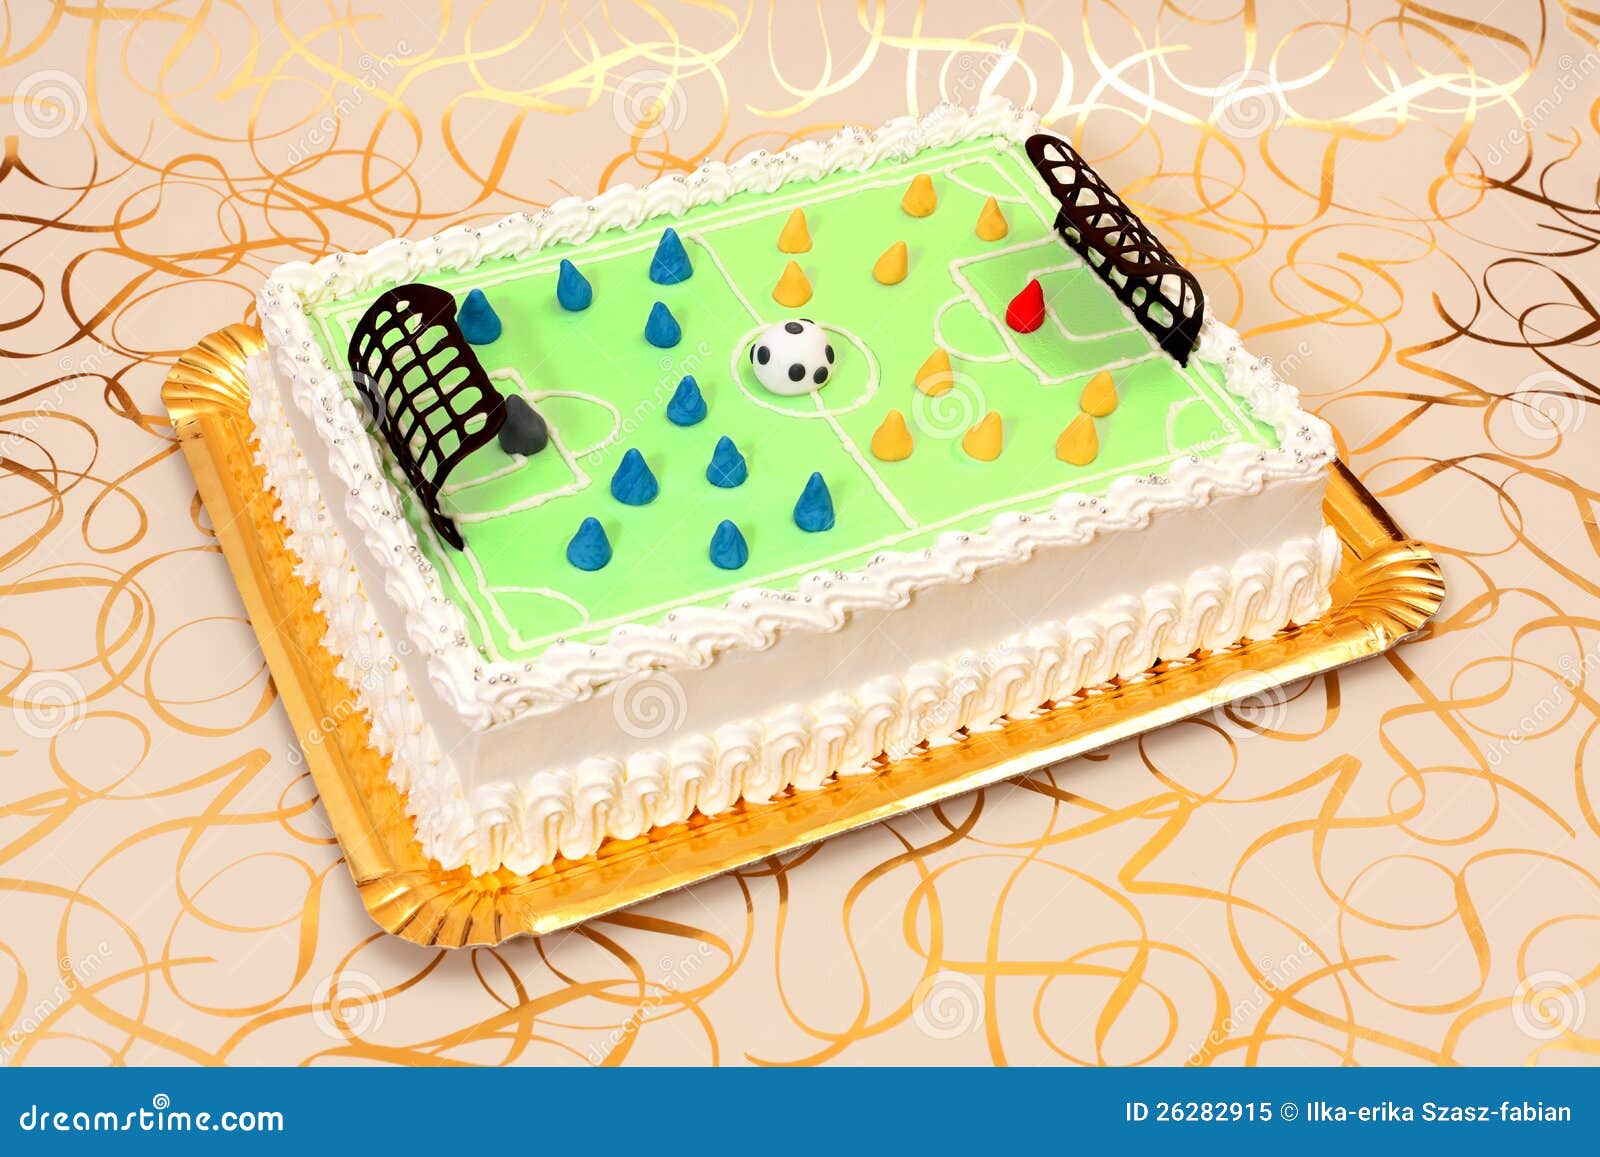 SOCCER FIELD CAKE 足球场蛋糕 - Cube Bakery & Cafe